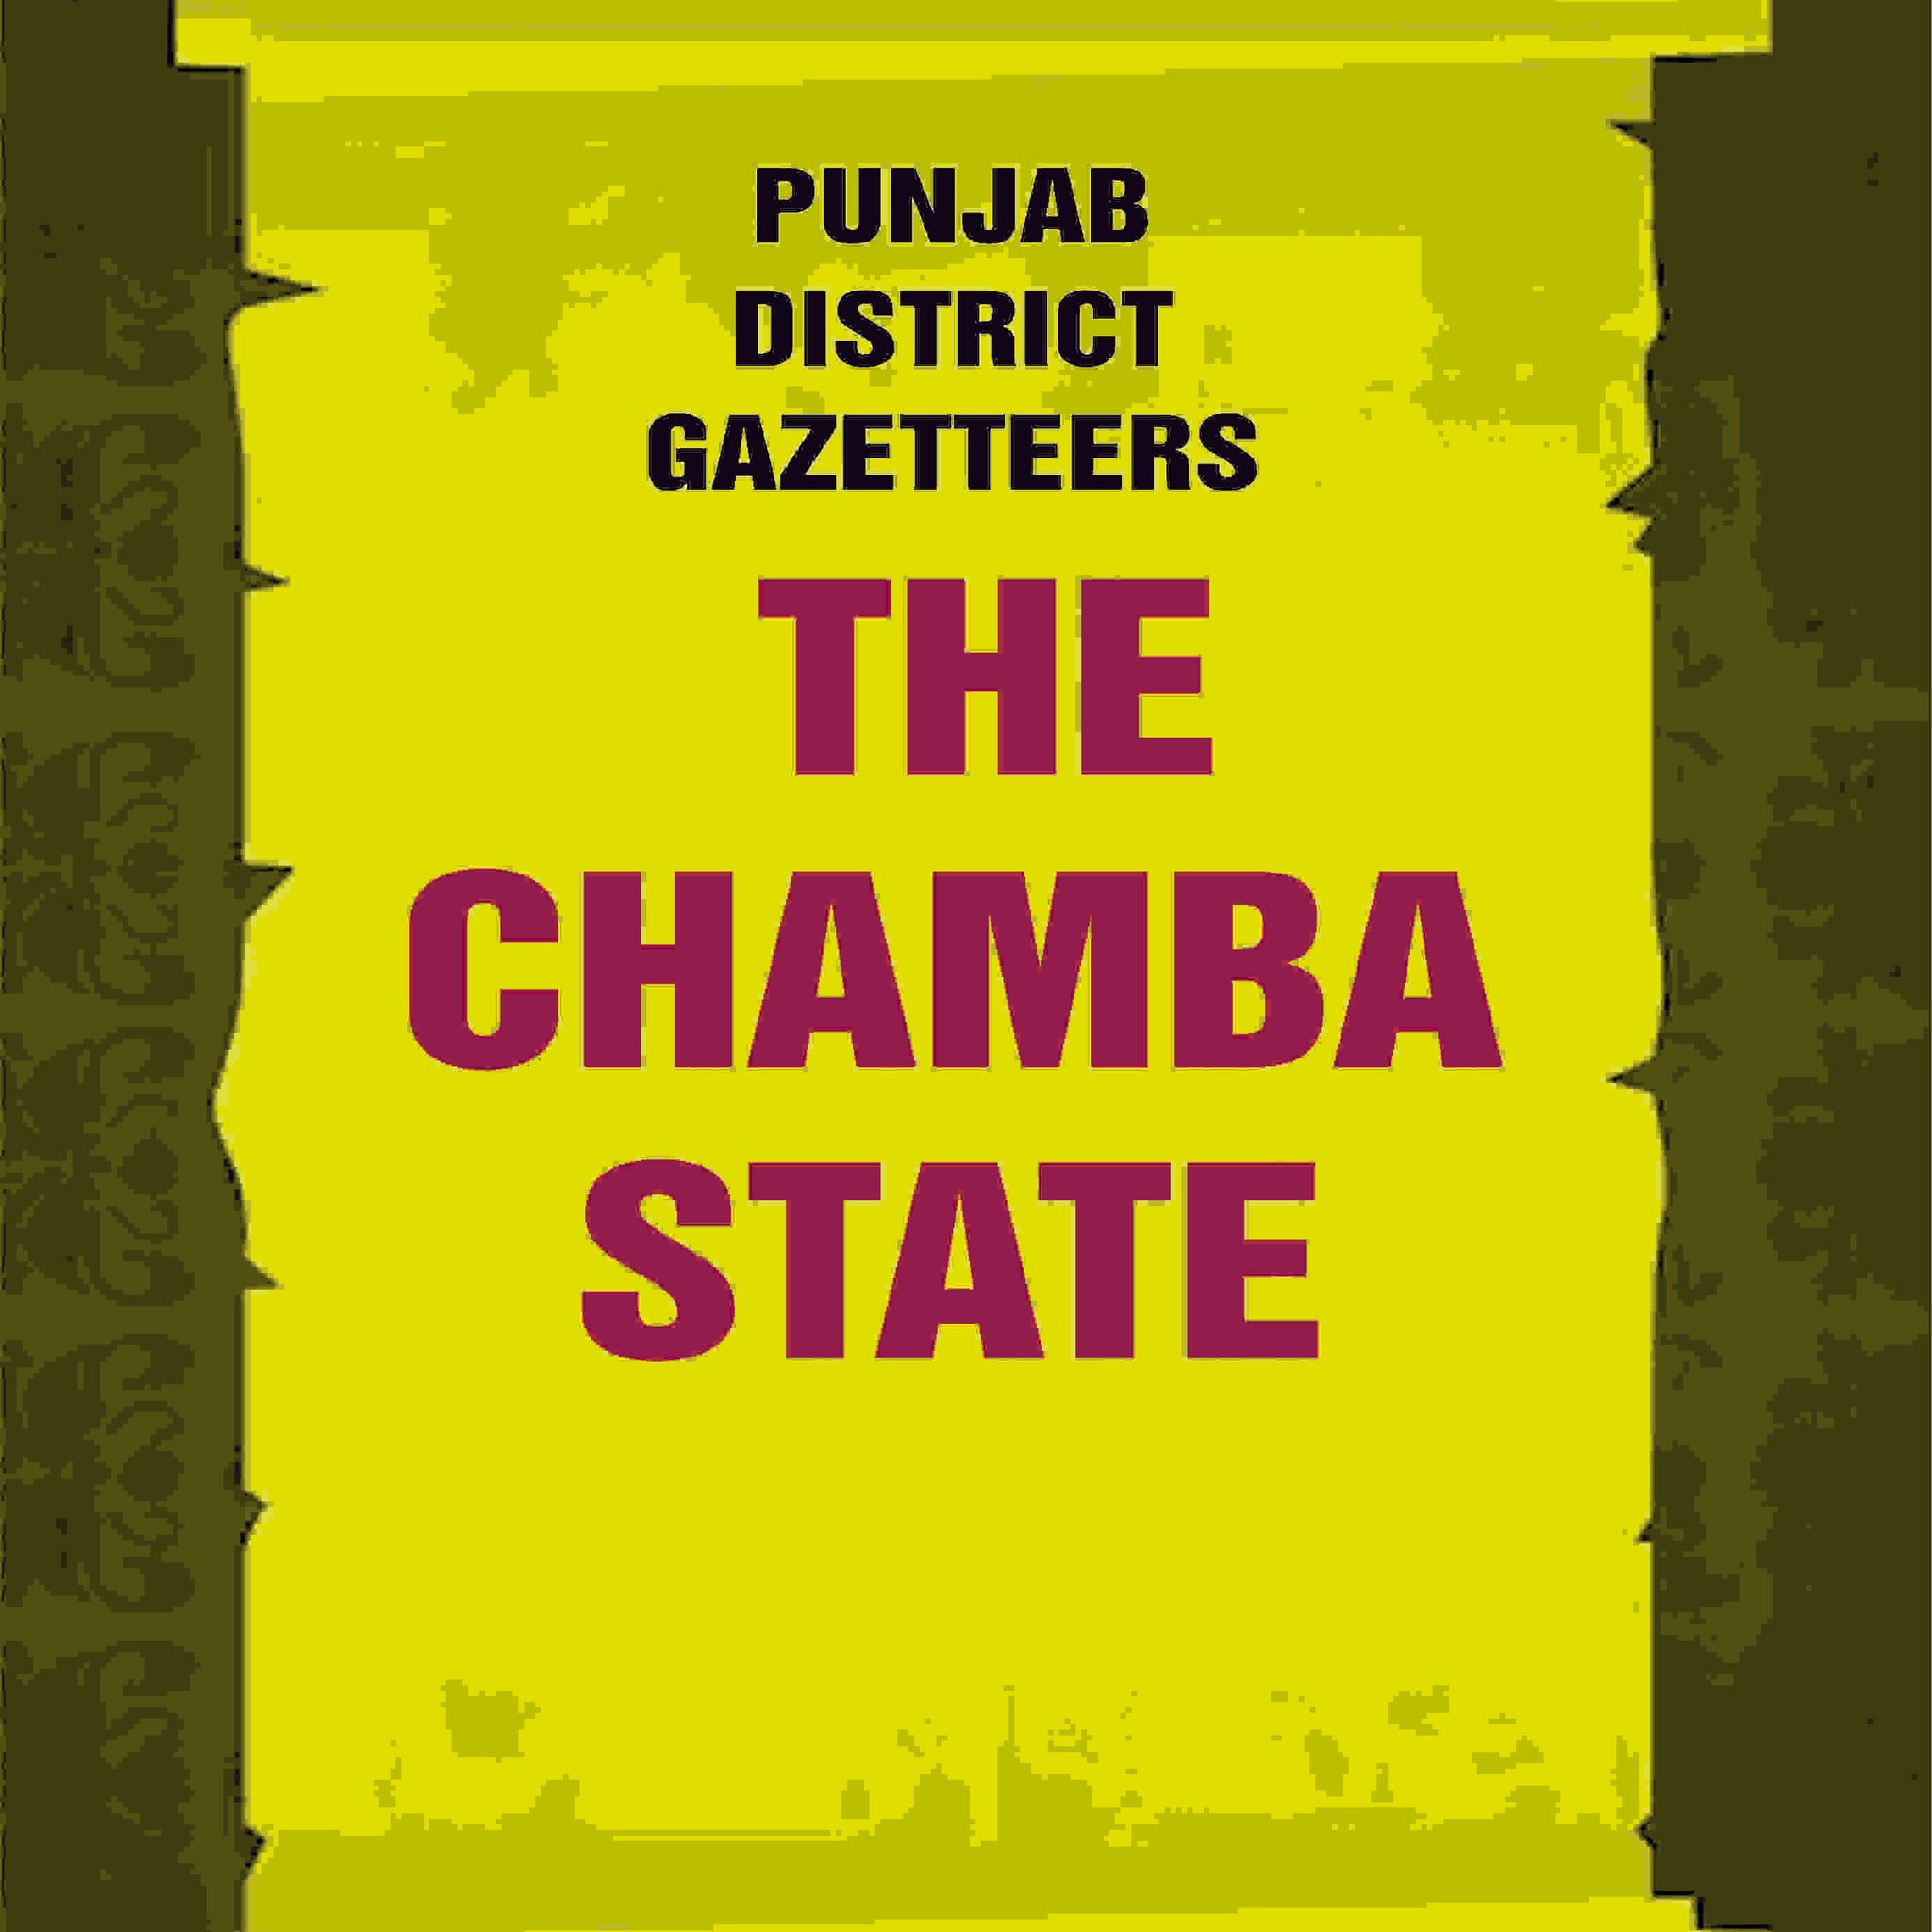 Punjab District Gazetteers: The Chamba State